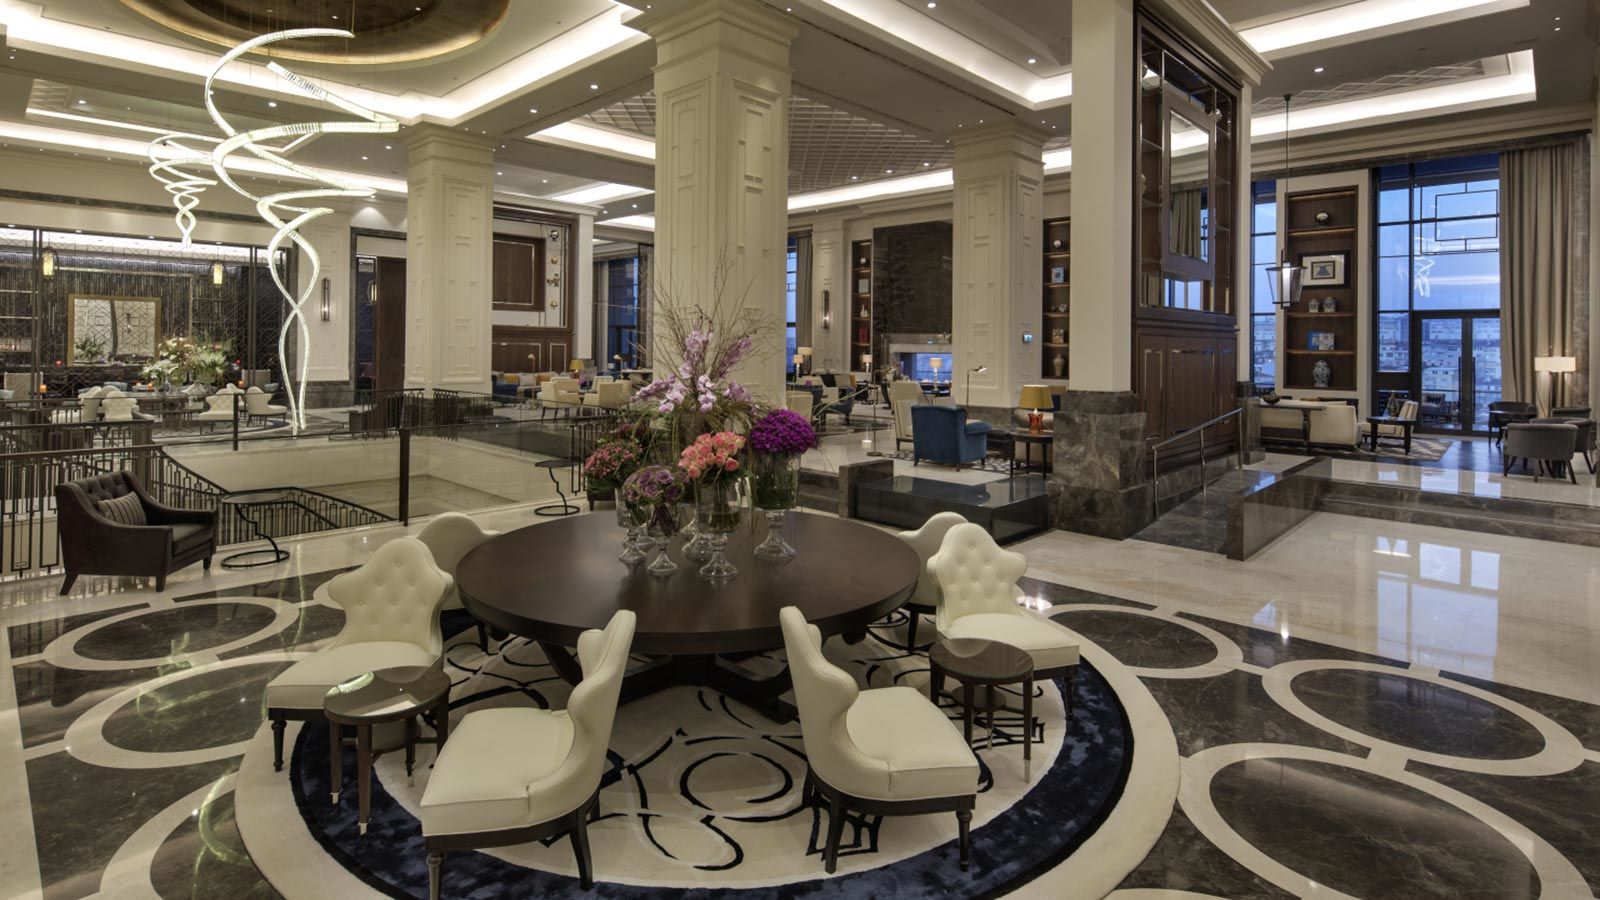 Inside Hilton's Hotel Reception Lobby Area - Mace Group 